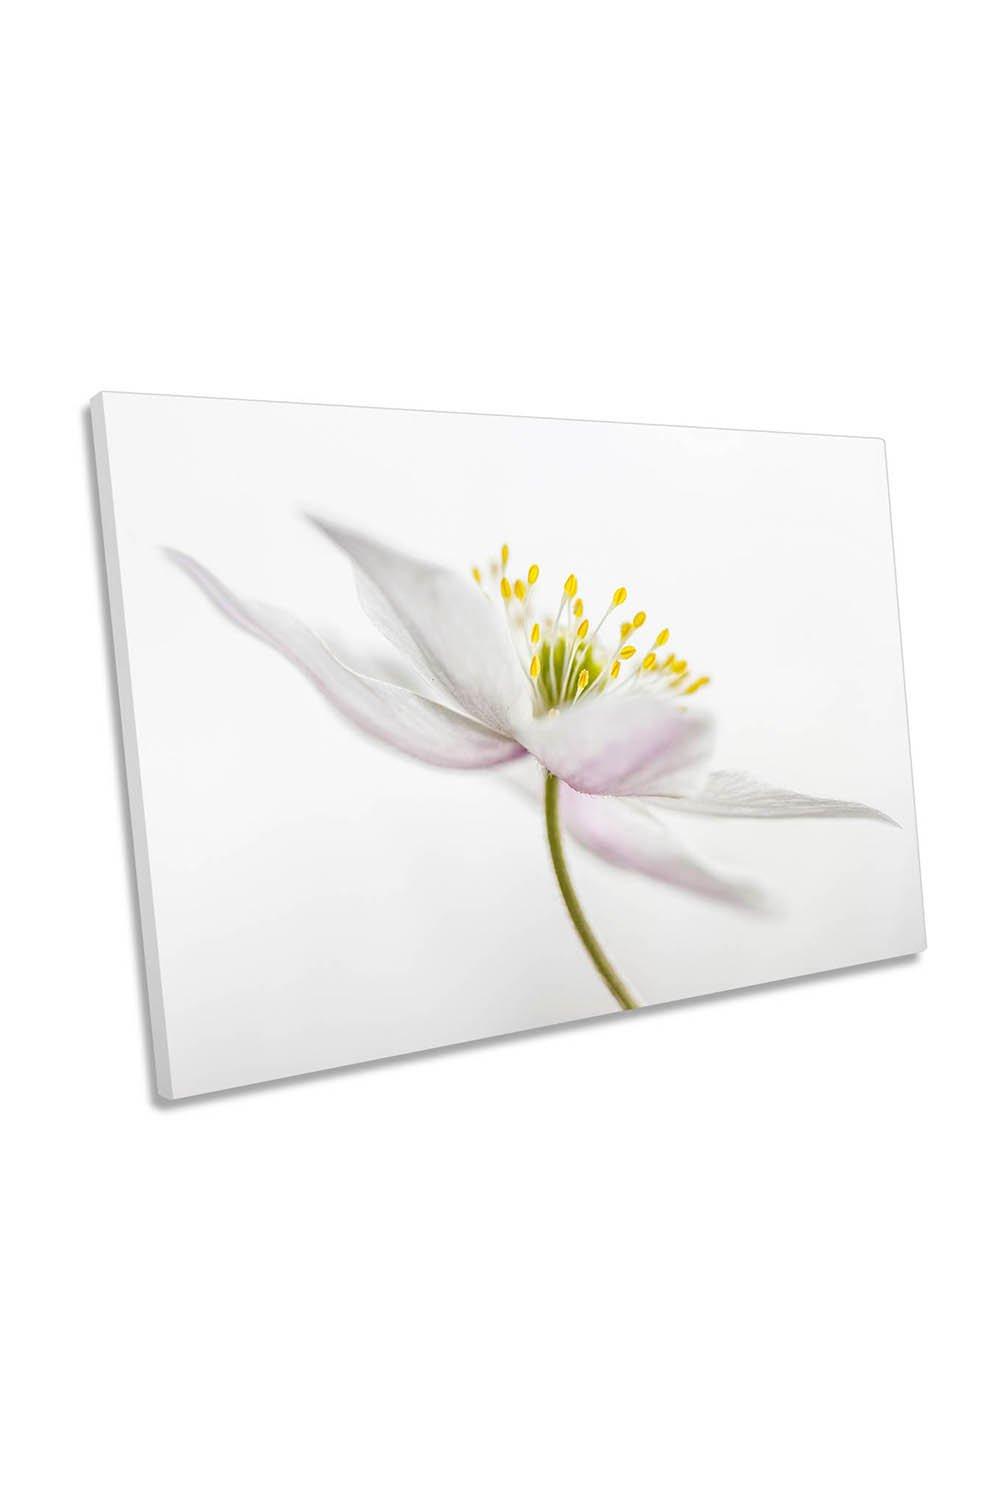 Nemorosa Flower Floral White Canvas Wall Art Picture Print